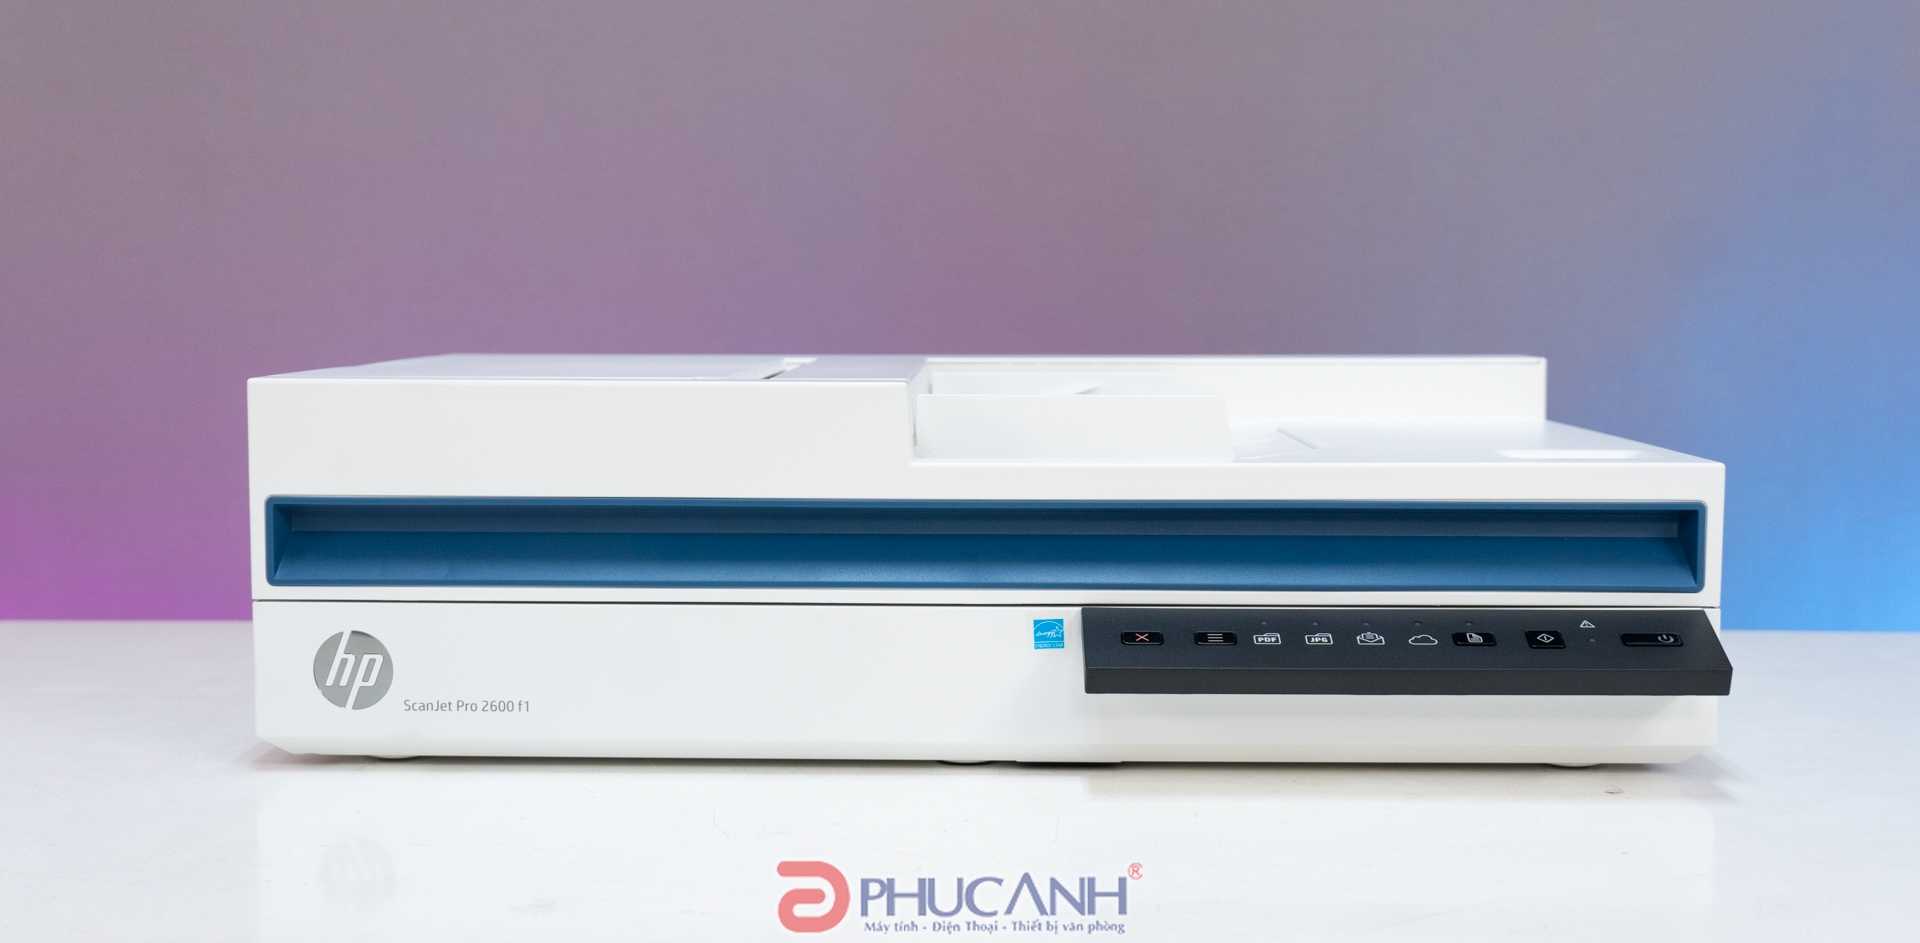 HP ScanJet Pro 2600 F1